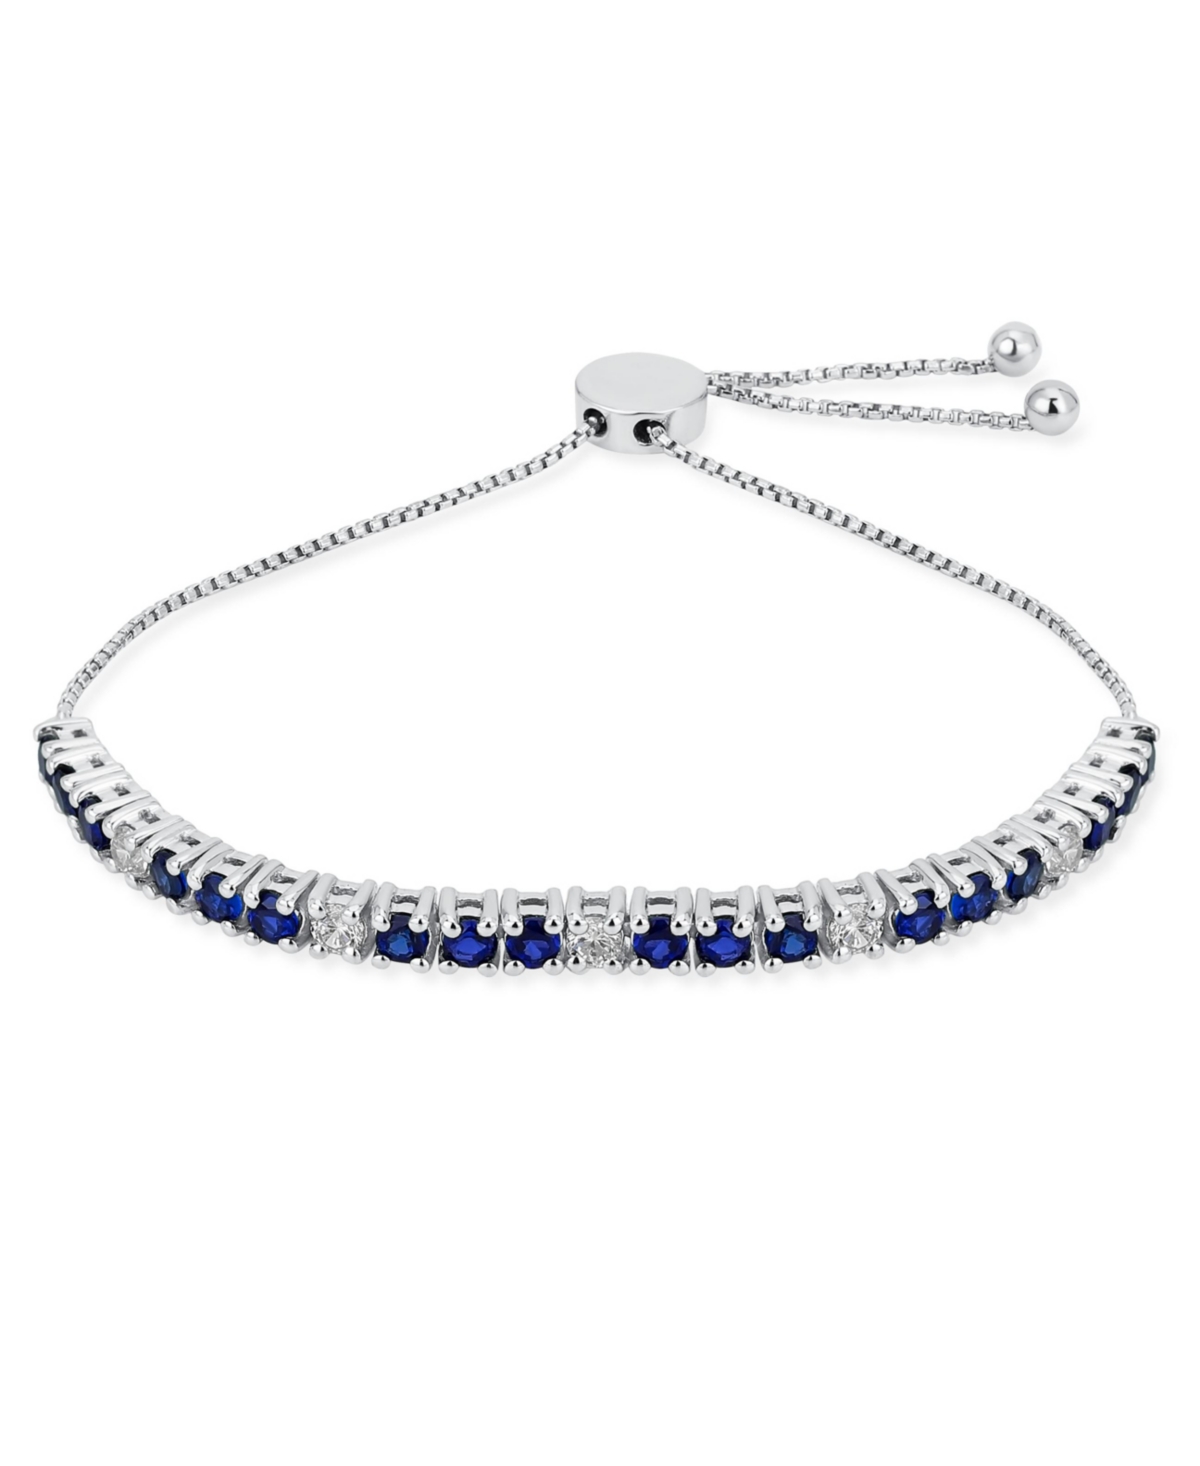 Gemstones 2.2 Ctw White Zircon Alternating Created Blue Sapphire Bolo Tennis Bracelet for Women Adjustable 7-8 Inch .925 Sterling Silver - Blue